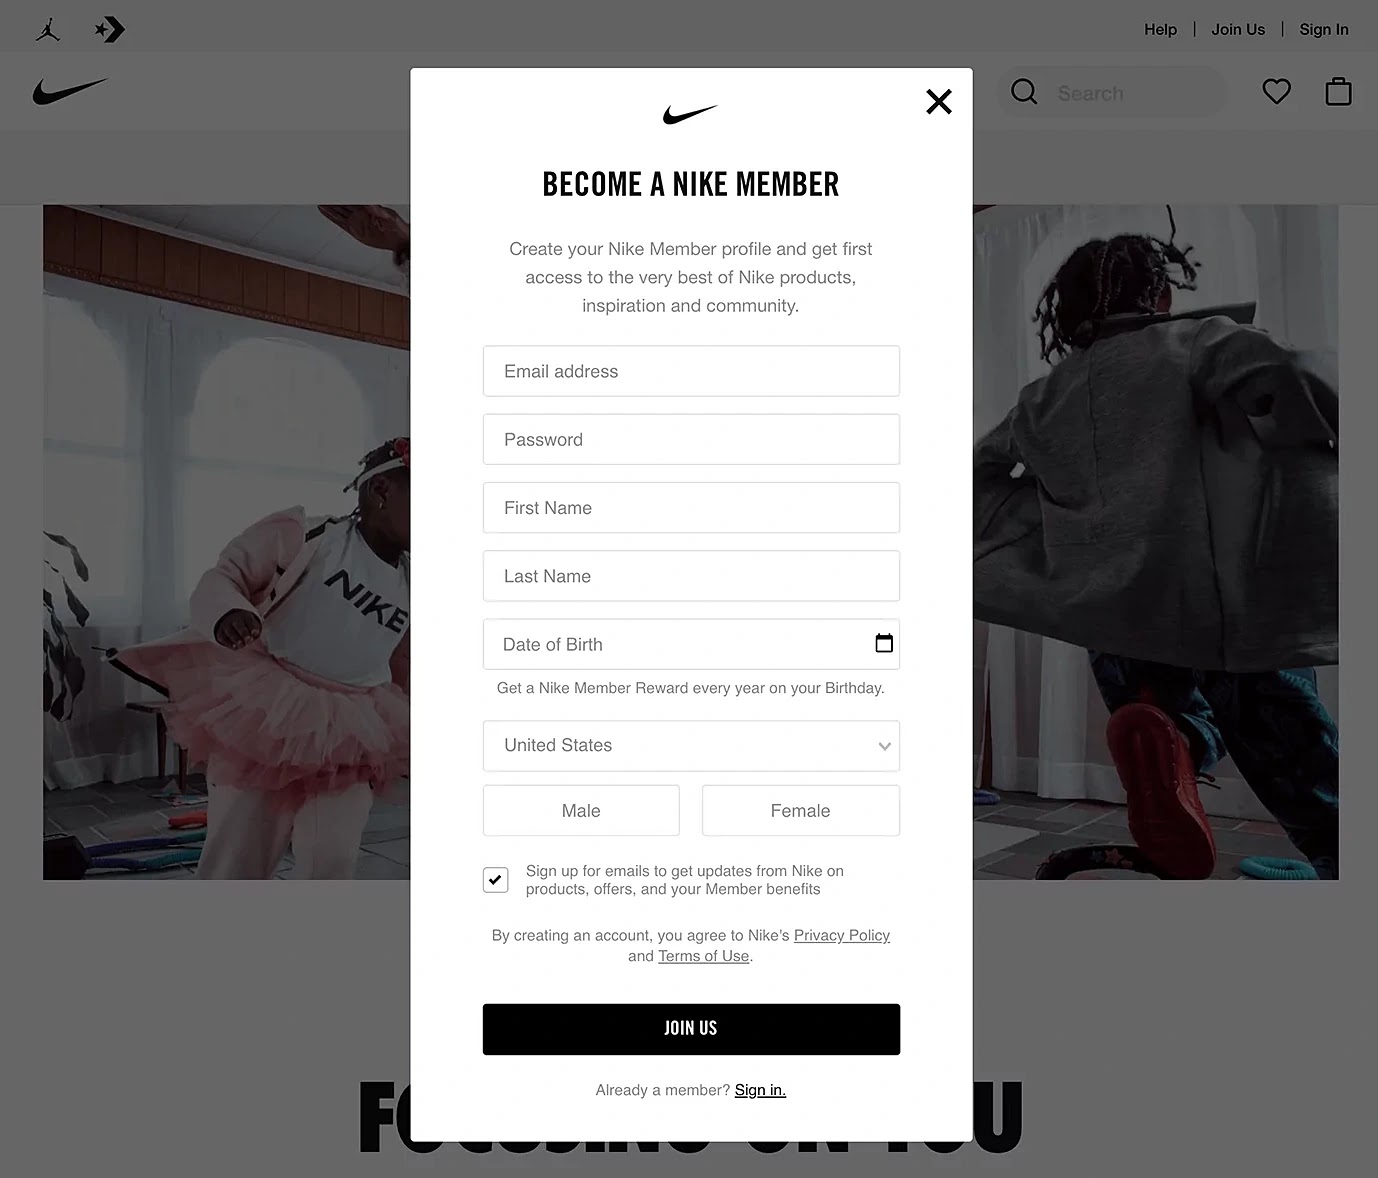 Nike's "Become a Nike Member" form